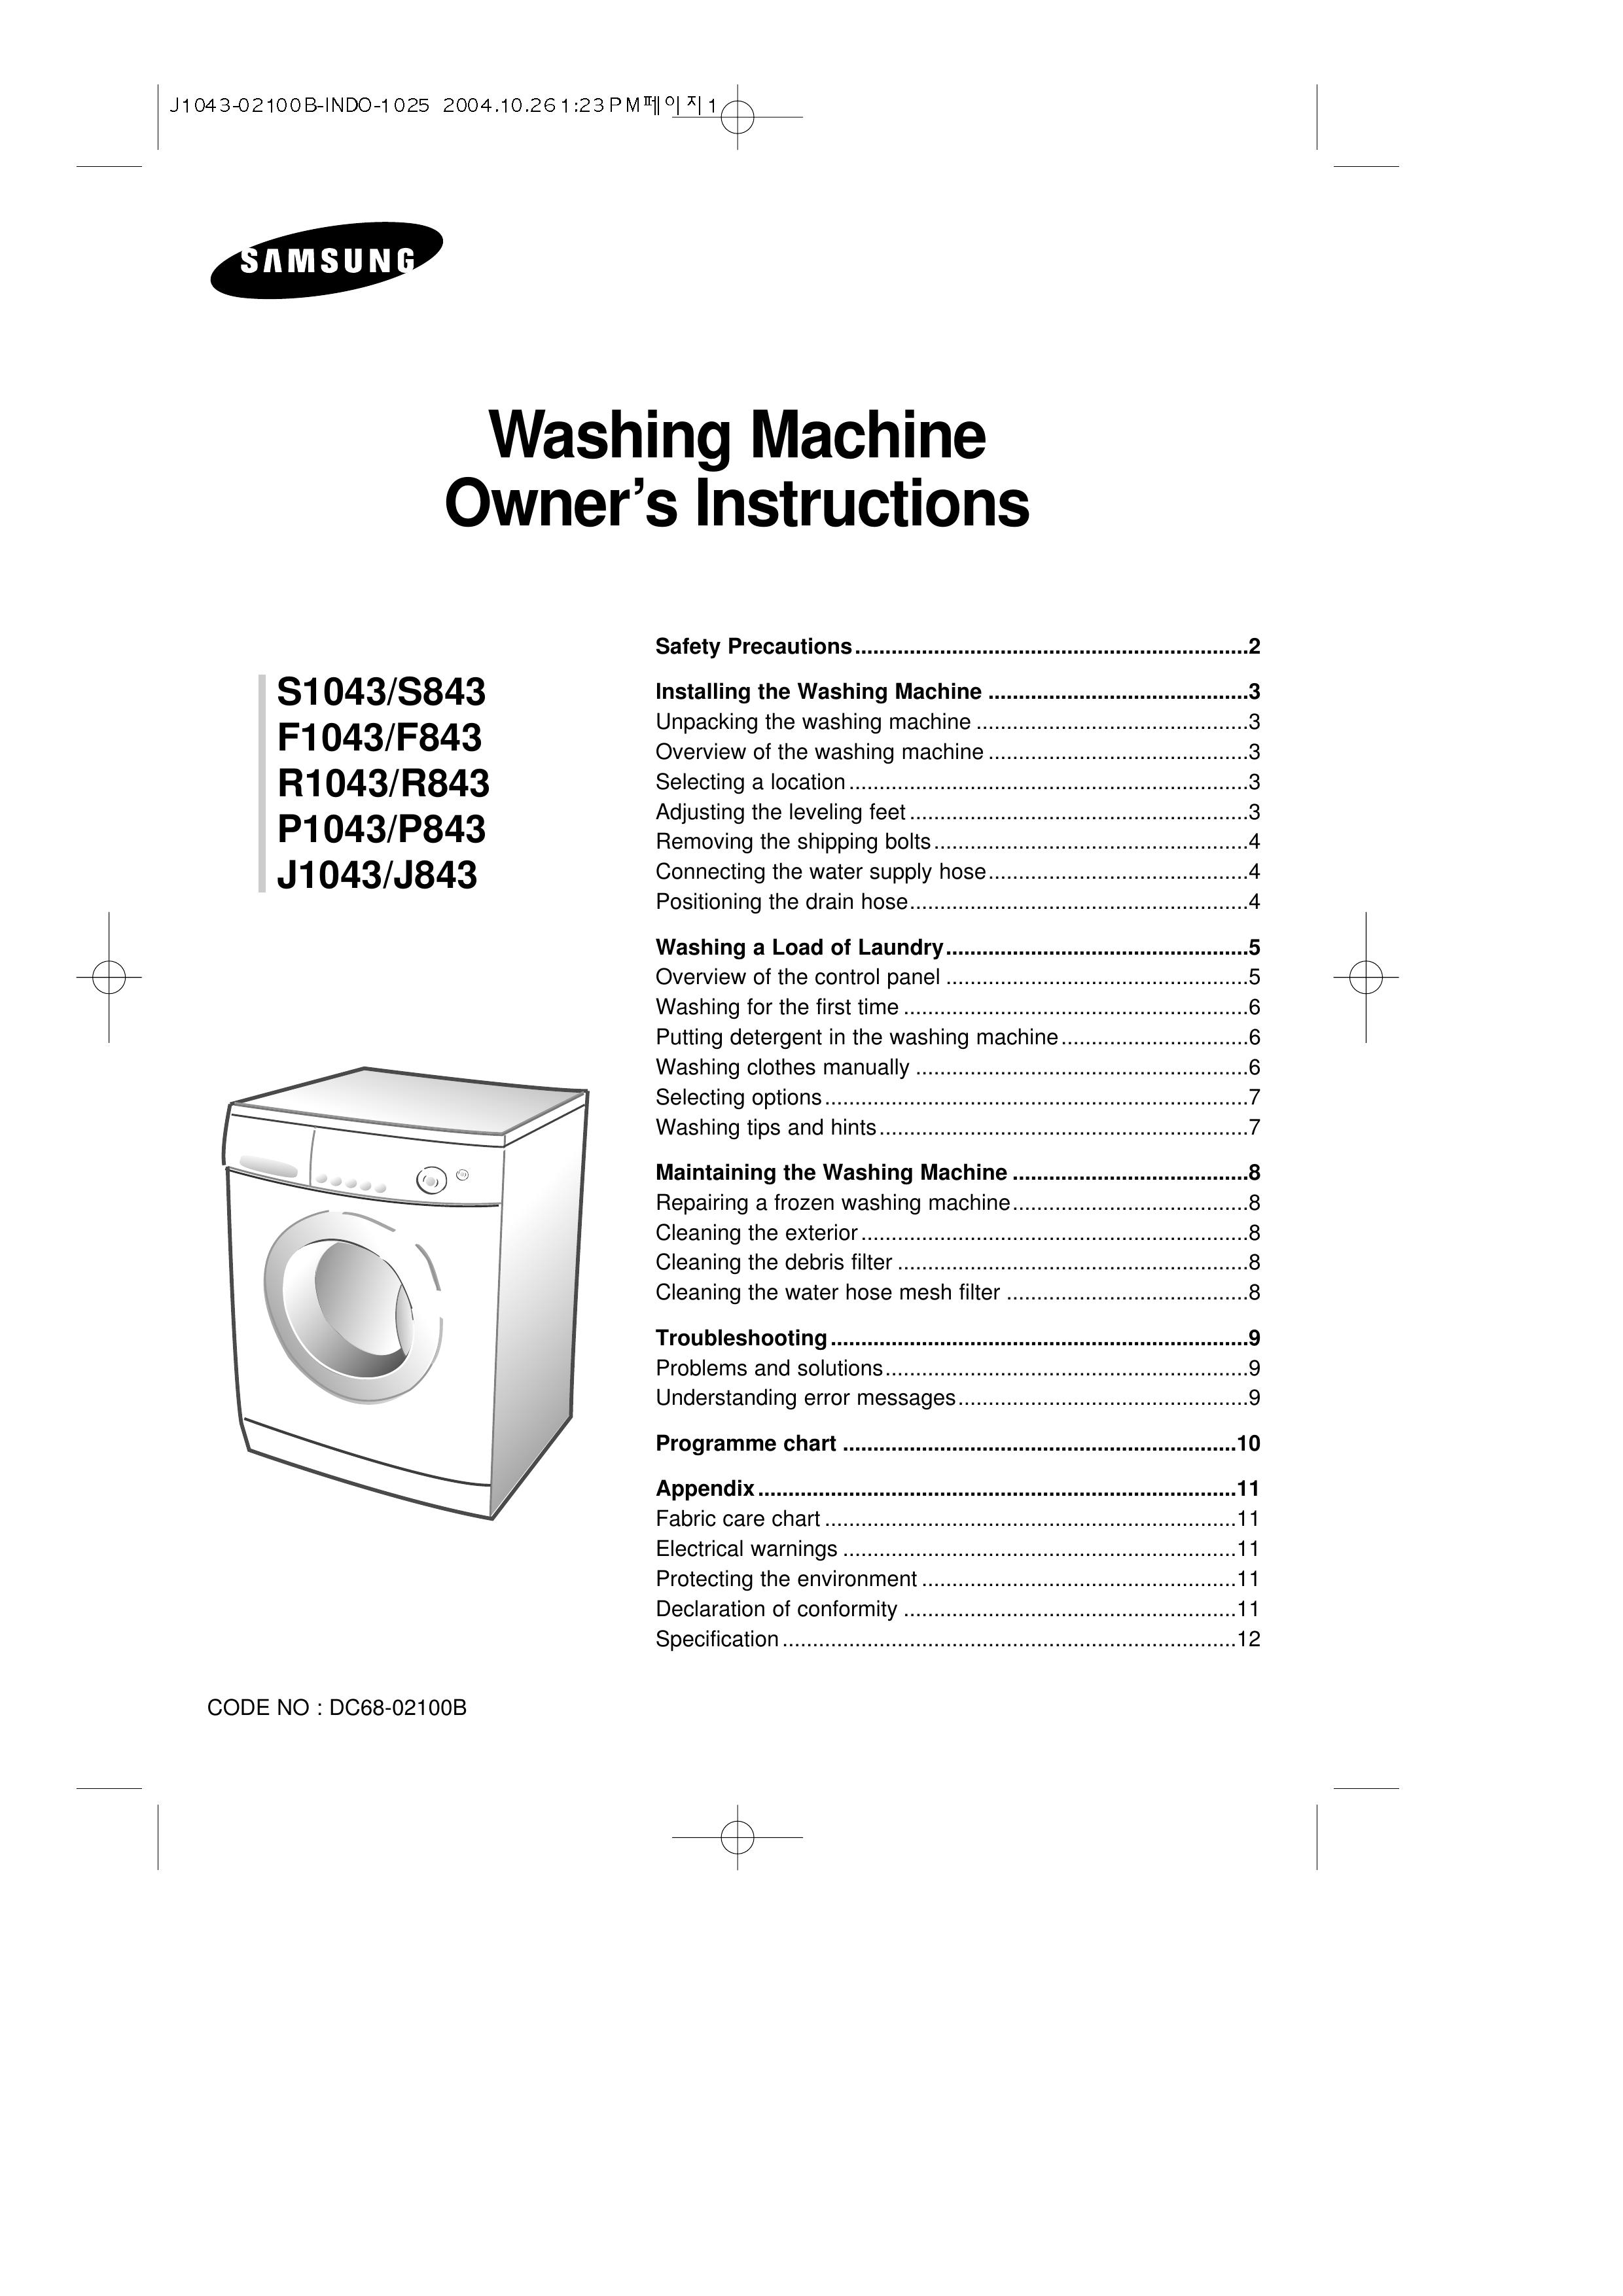 Samsung F1043/F843 Washer User Manual